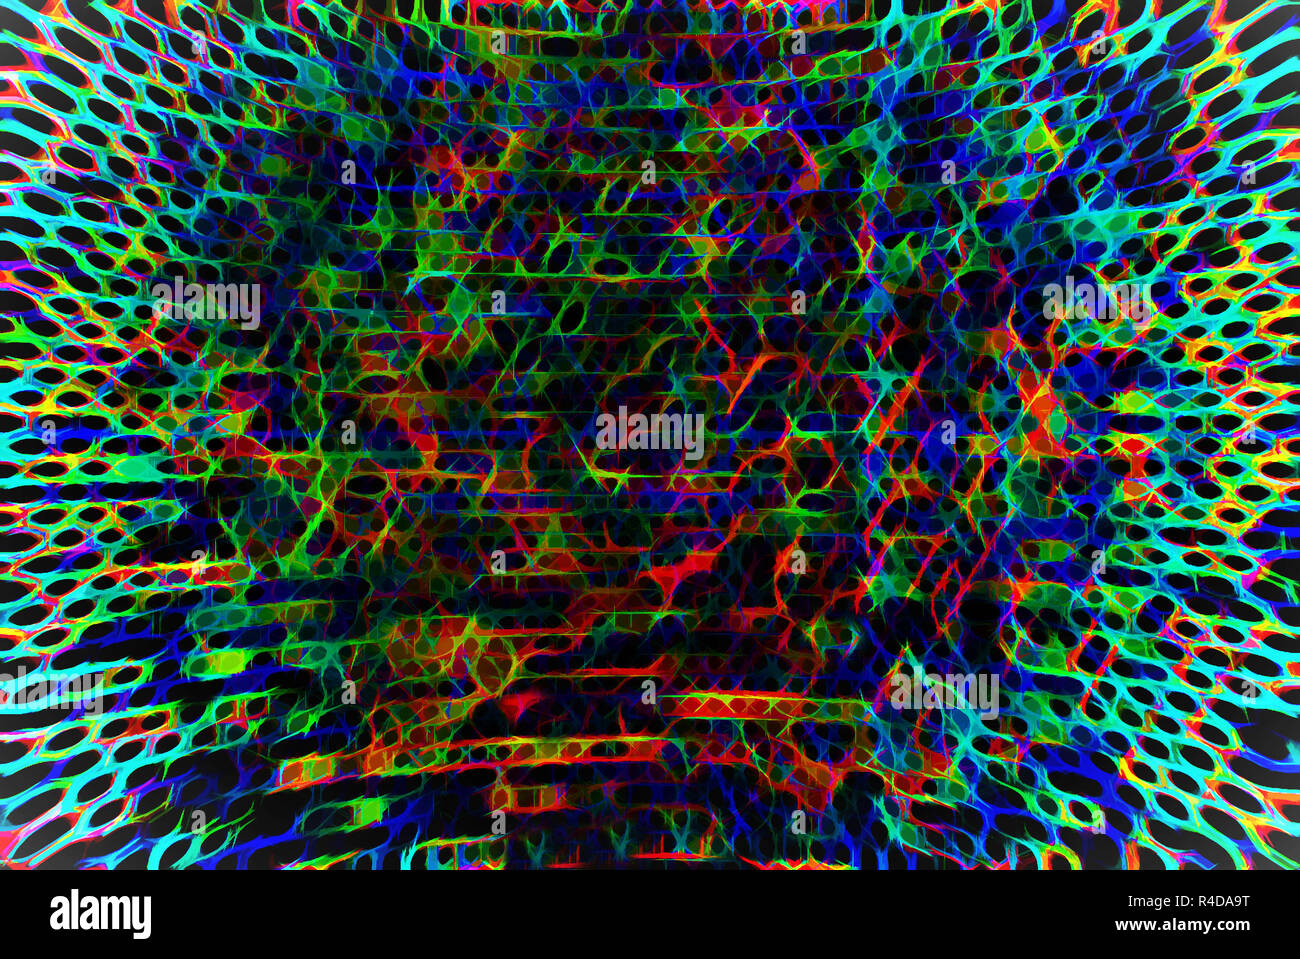 Acid colored artistic grid illustration Stock Photo - Alamy